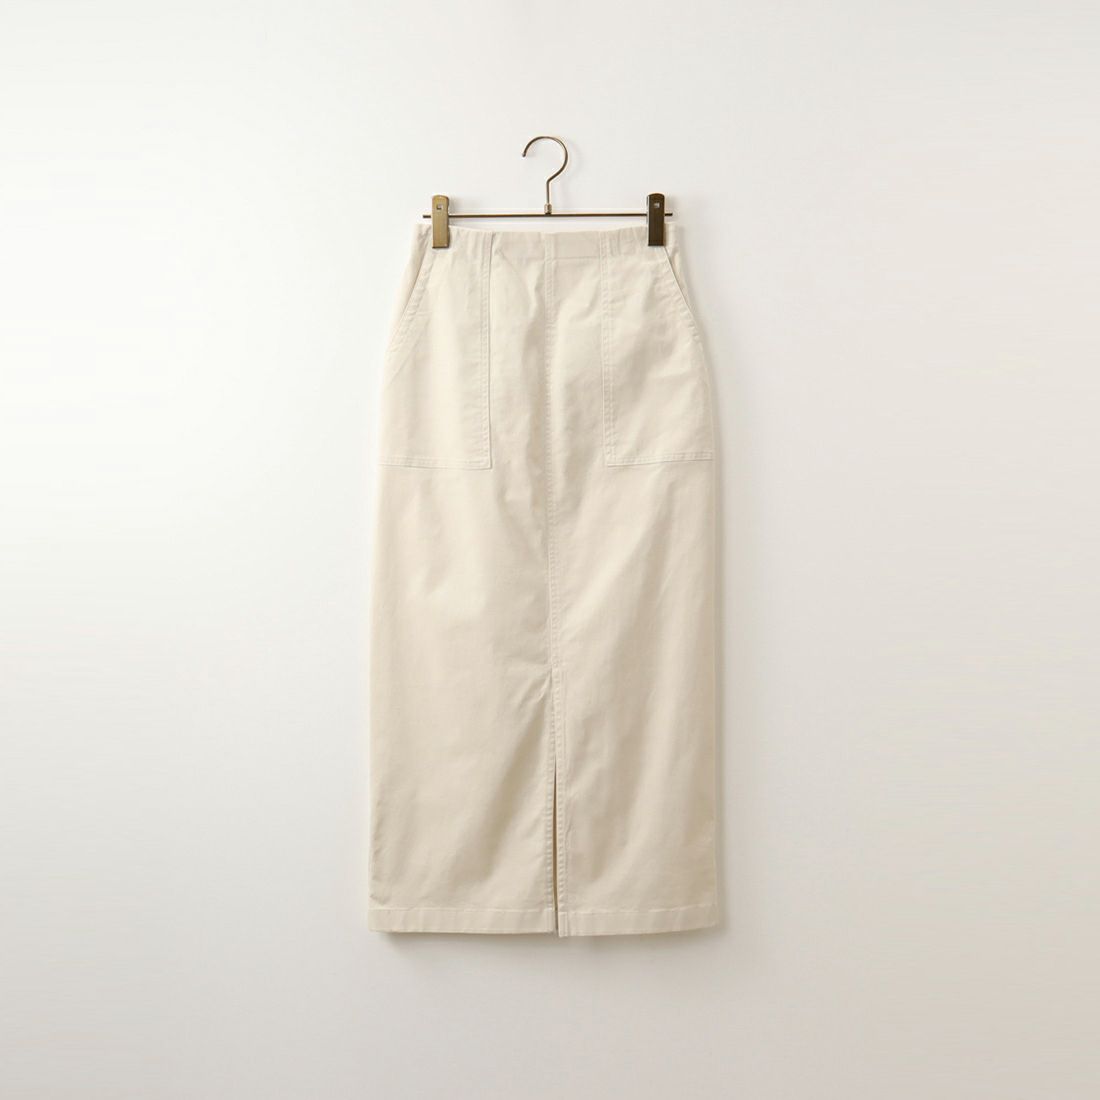 Jeans Factory Clothes [ジーンズファクトリークローズ] コットンストレッチタイトベイカースカート [ISJF-01] NATURAL